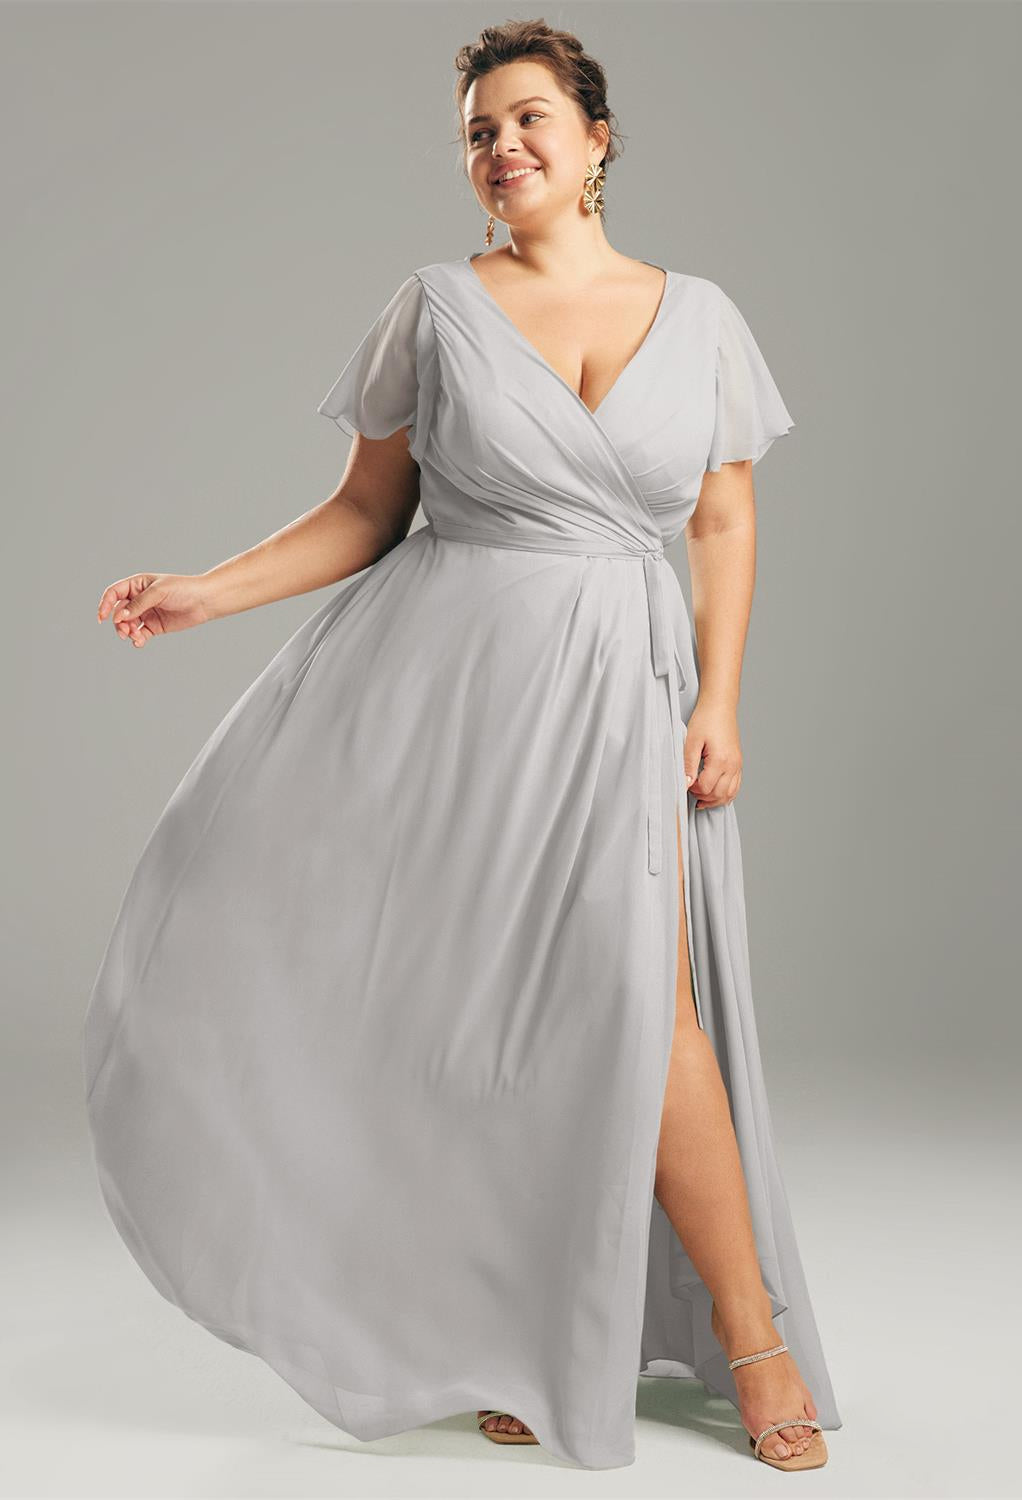 A grey Ellison - Chiffon Bridesmaid Dress - Off The Rack with a split slit is available at a London bridal shop, Bergamot Bridal.